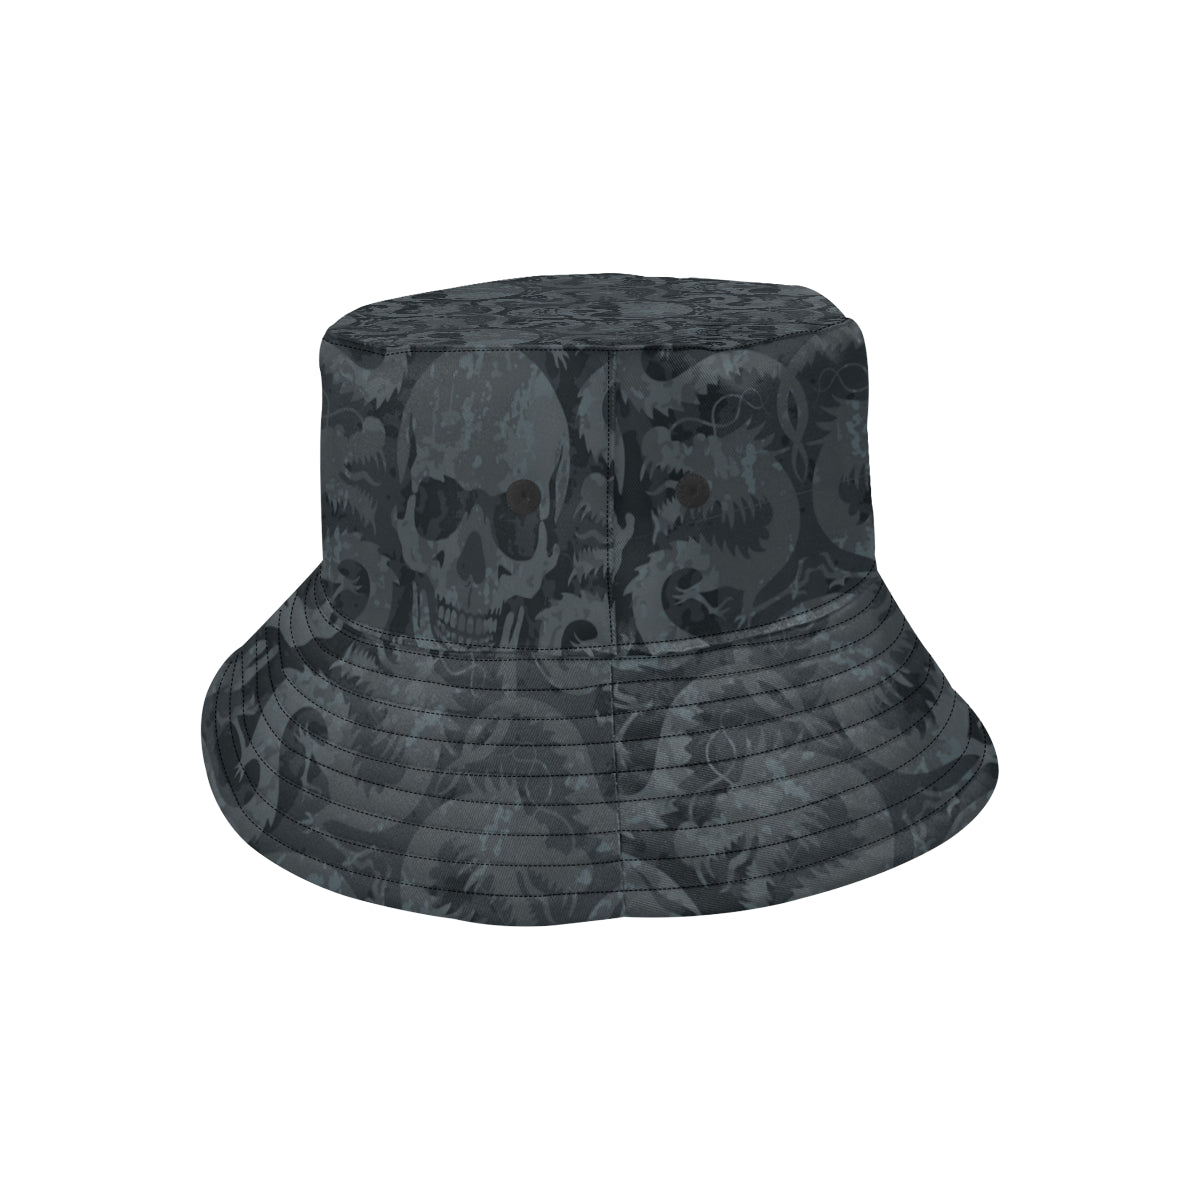 Dragons & Skulls Retro Bucket Hat